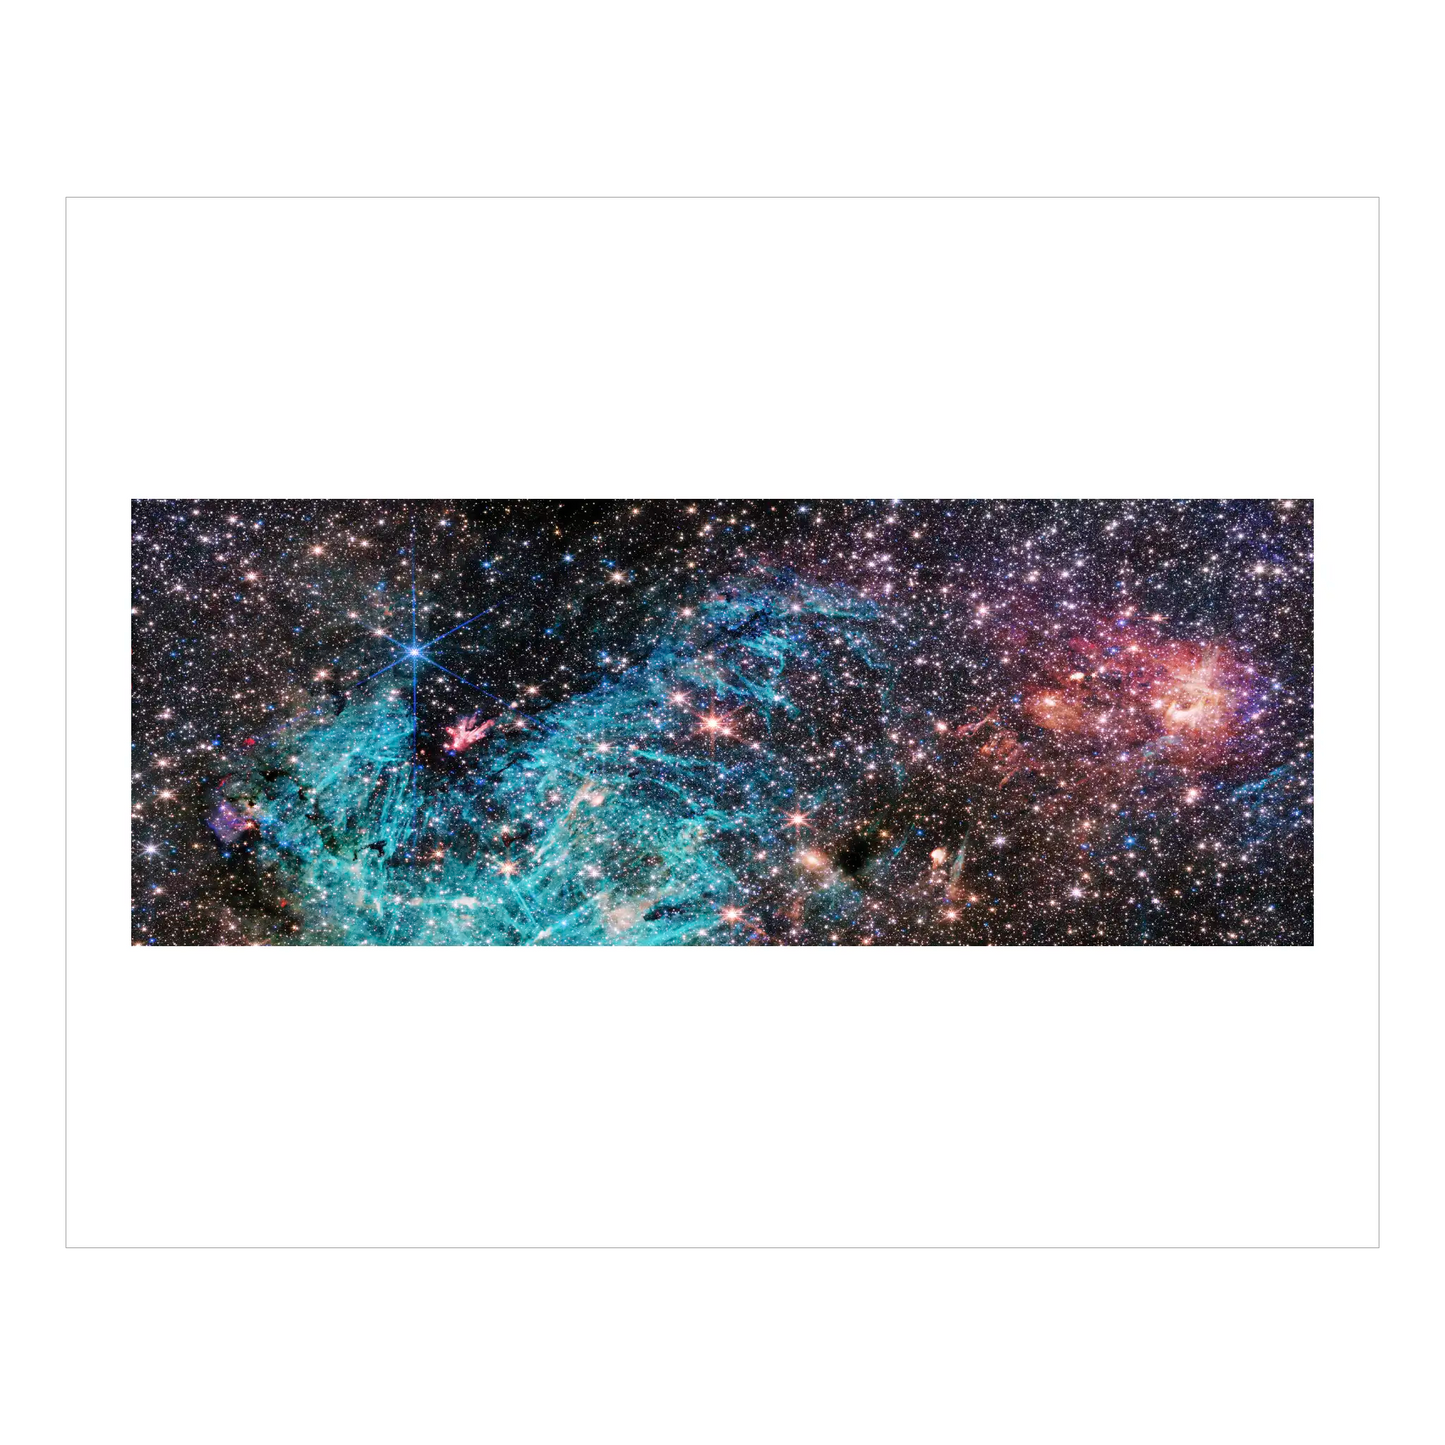 Heart of the Milky Way (Sagittarius C)